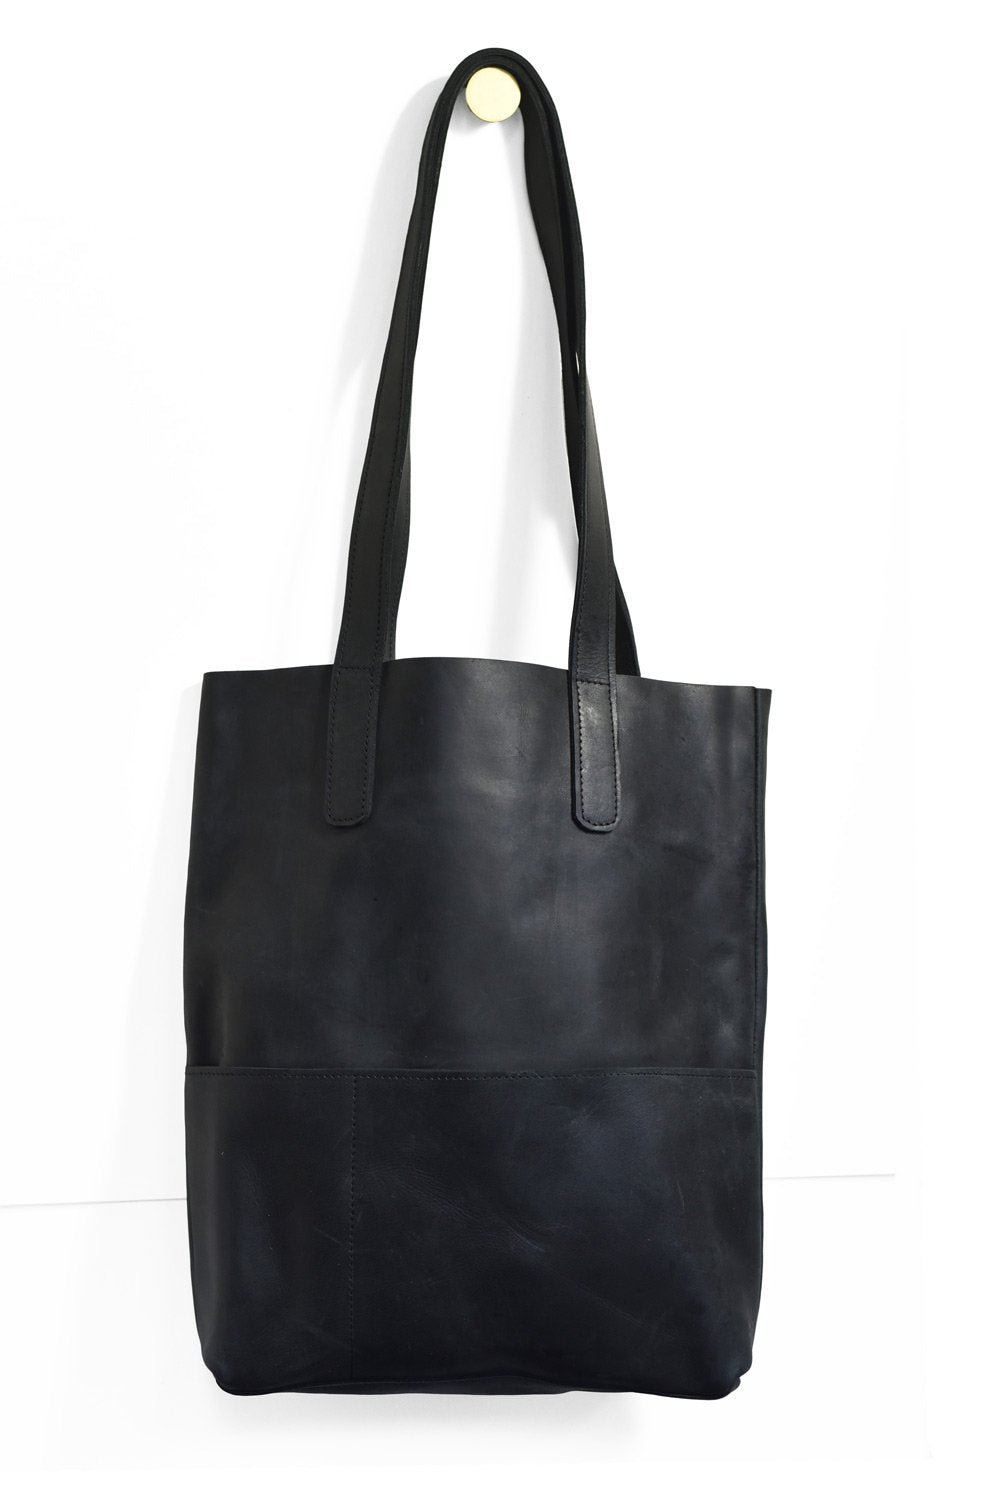 Outside Pockets Handbag - Ink Black | Made Trade